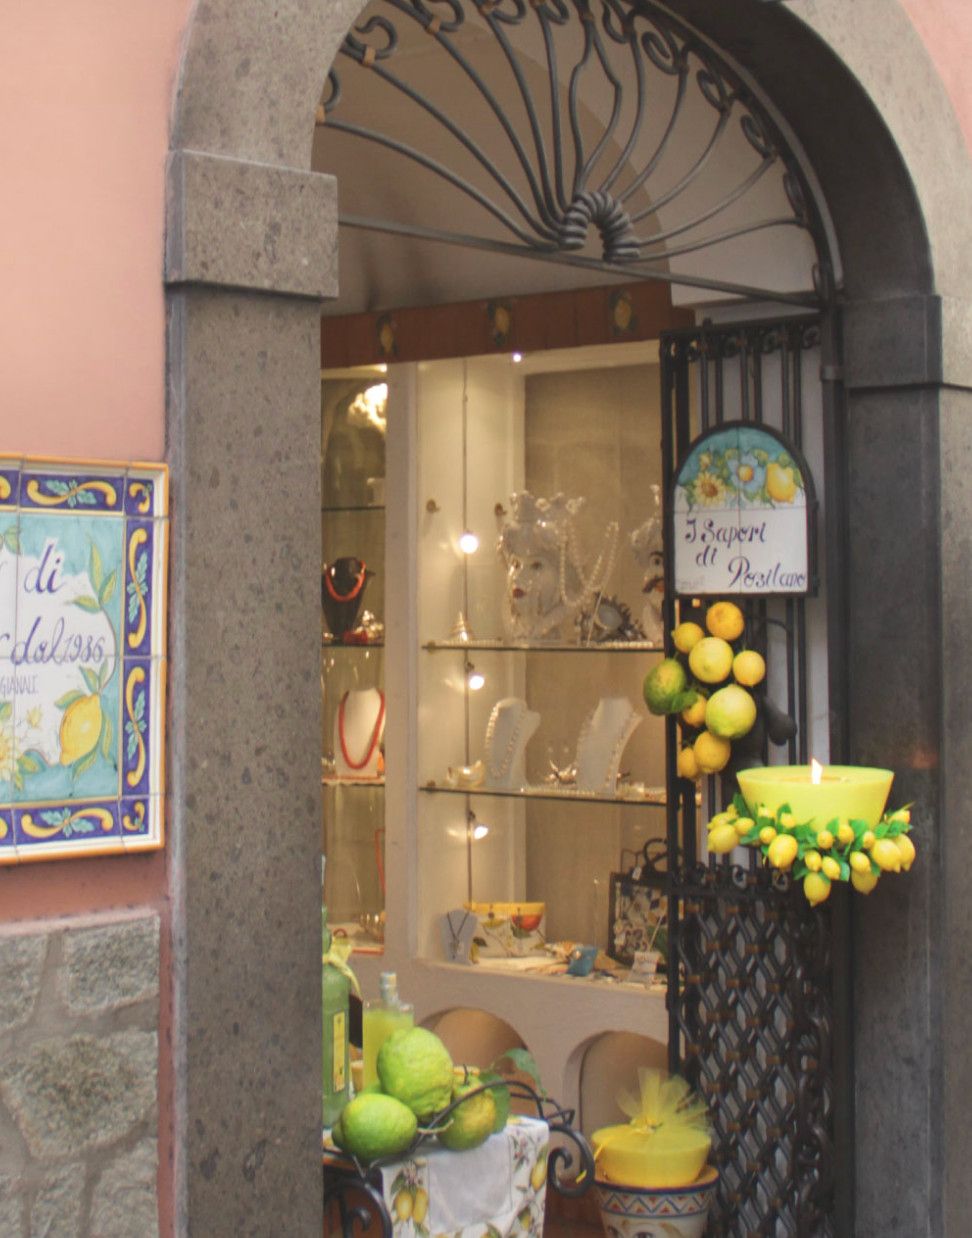 Discover Positano's Lemon Culture